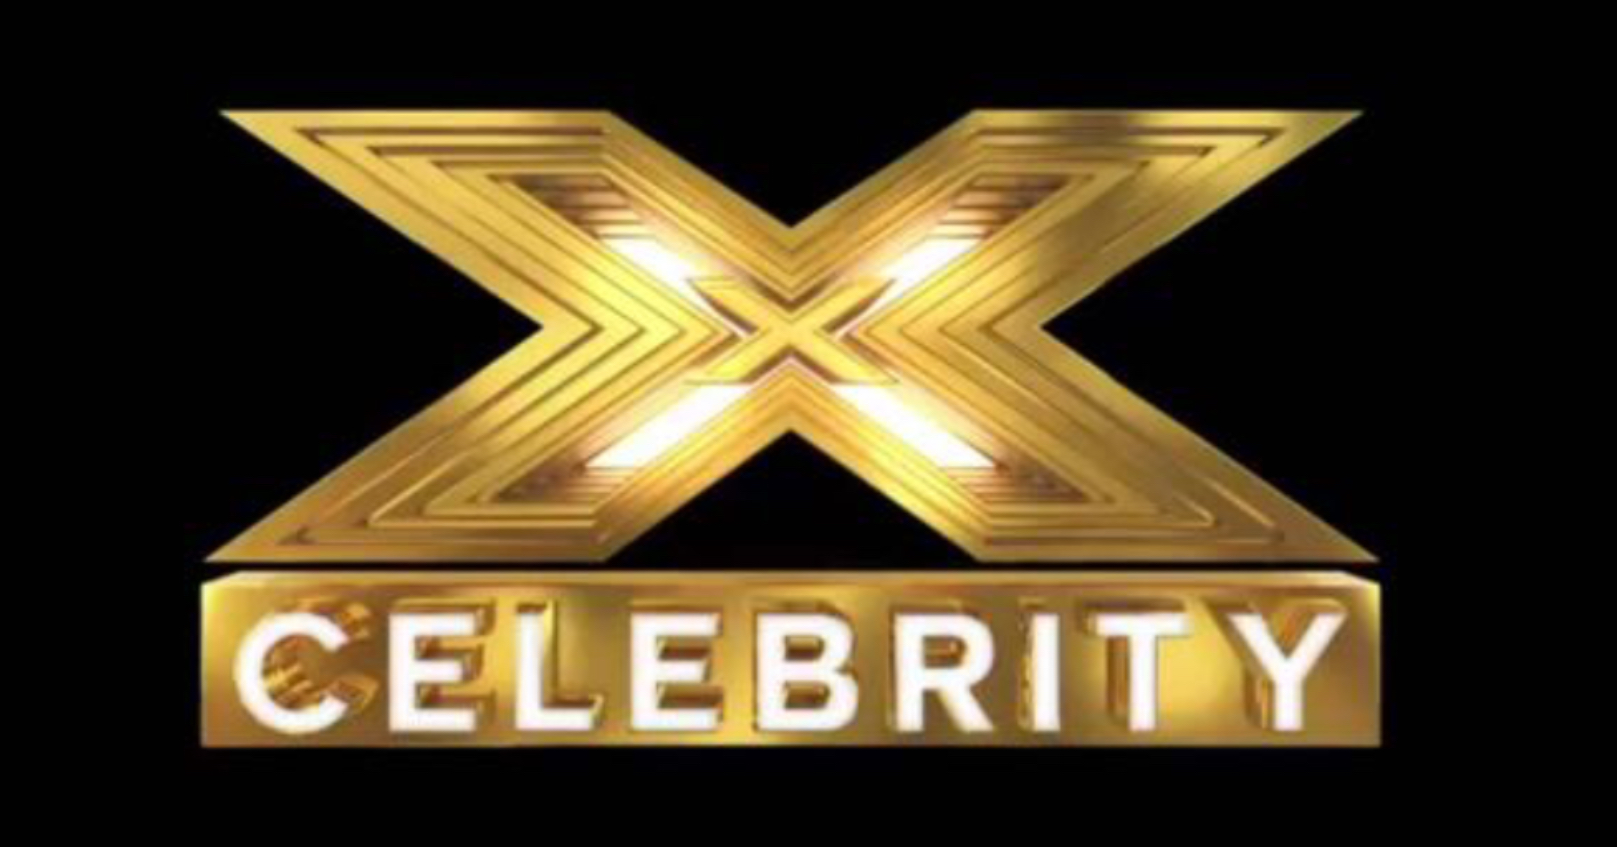 X Factor Celebrity